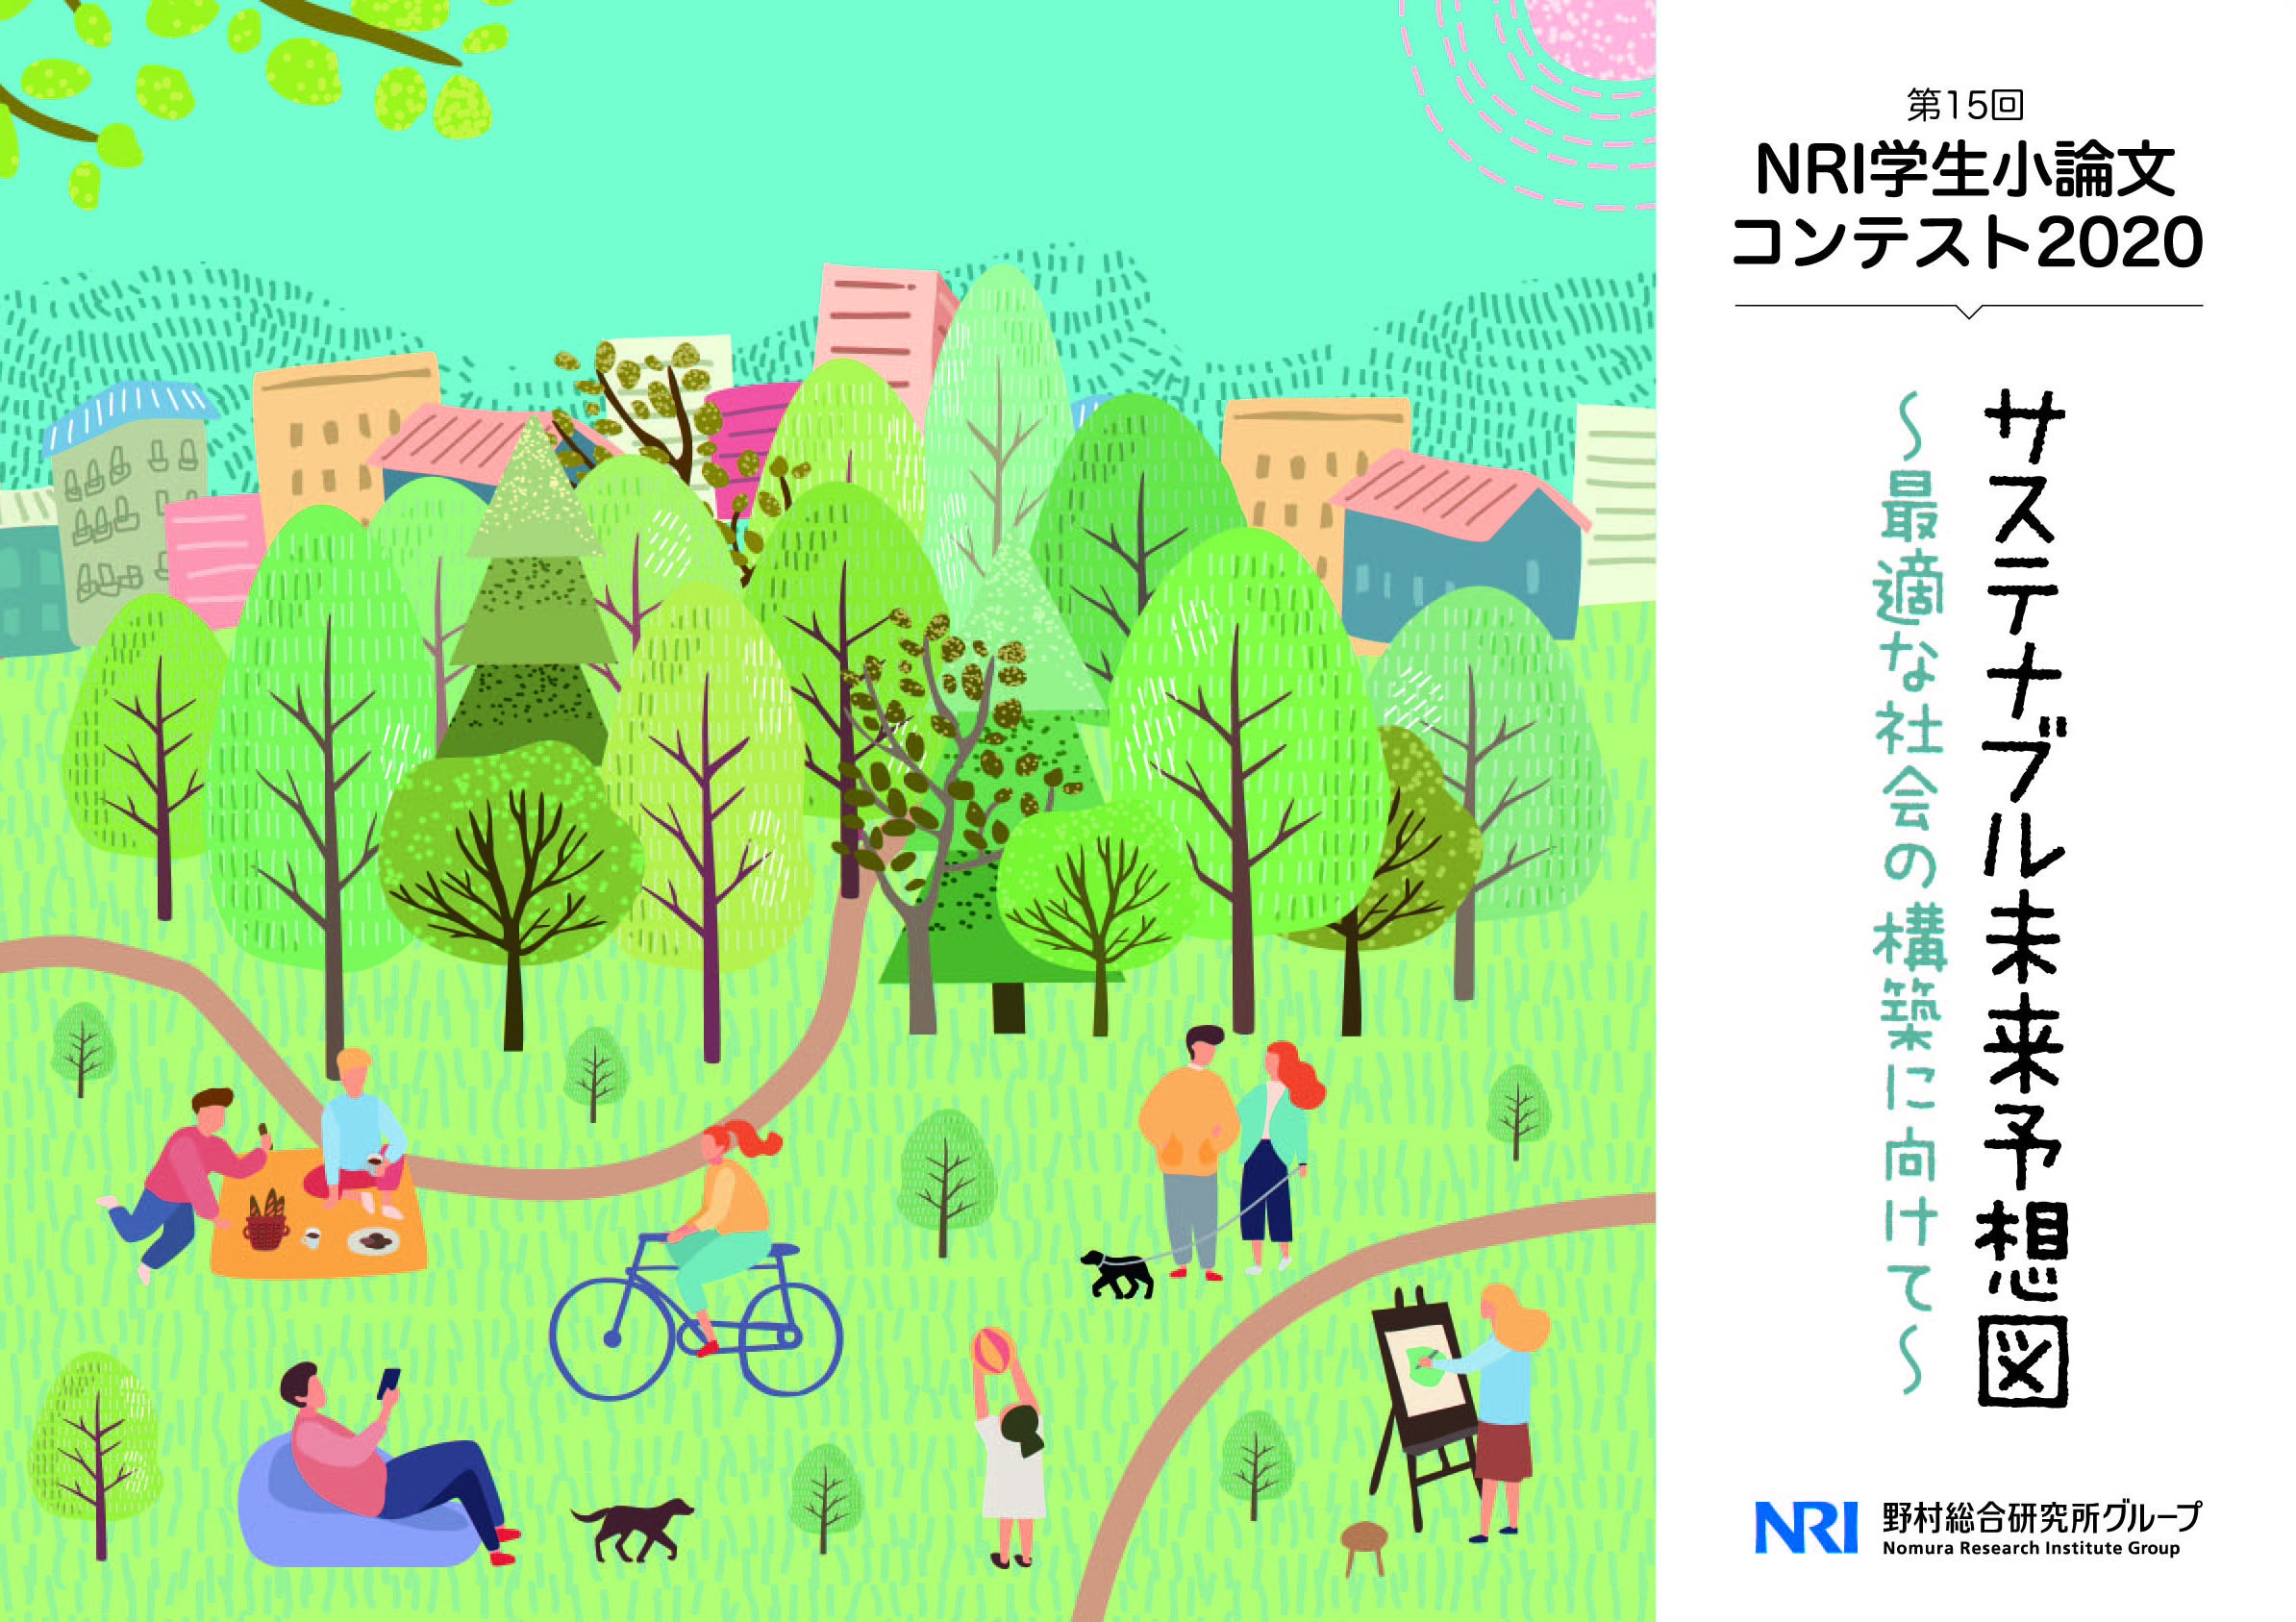 NRI学生小論文コンテスト2020